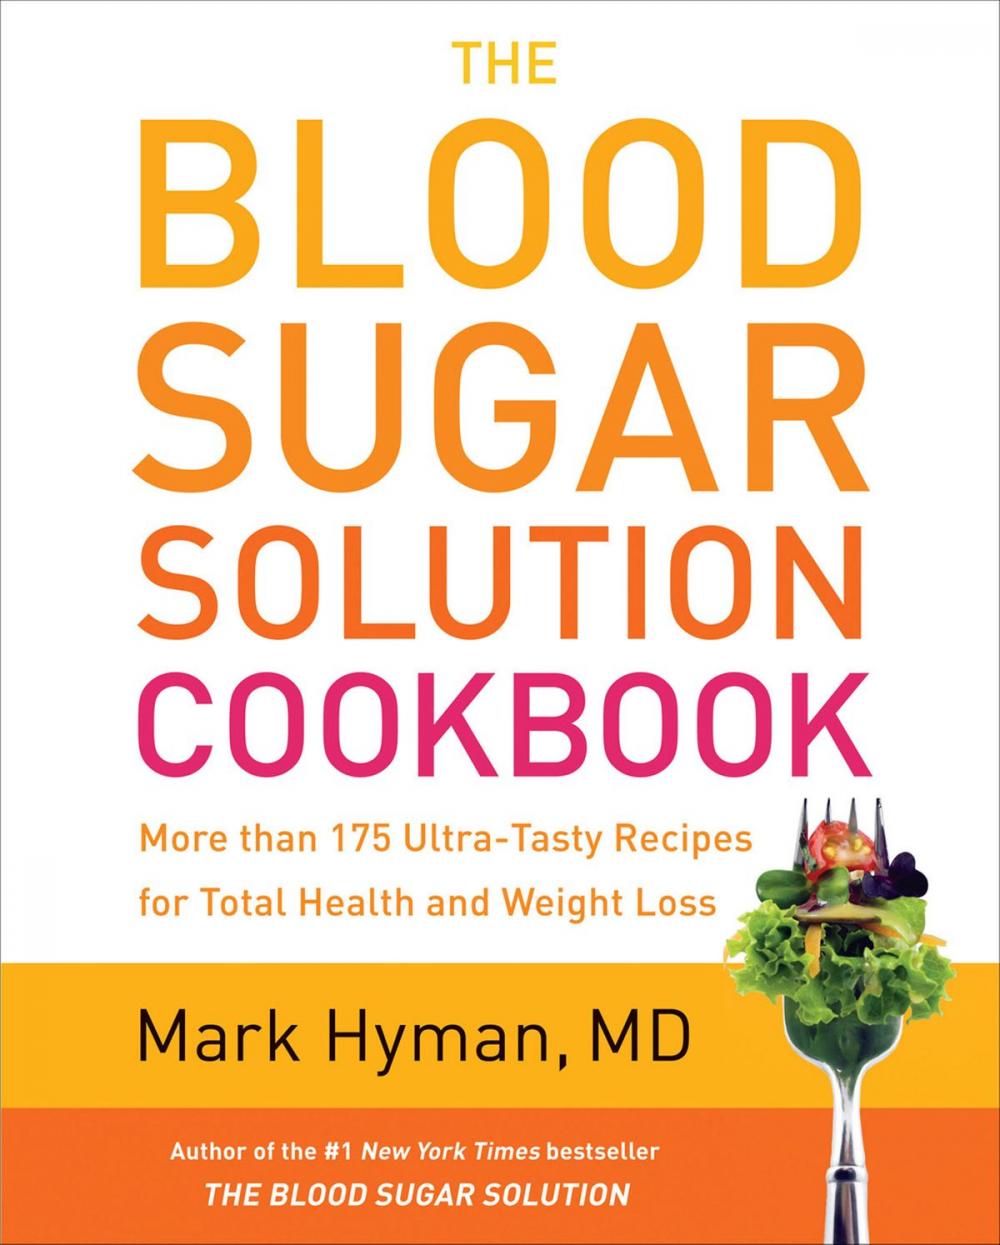 Big bigCover of The Blood Sugar Solution Cookbook